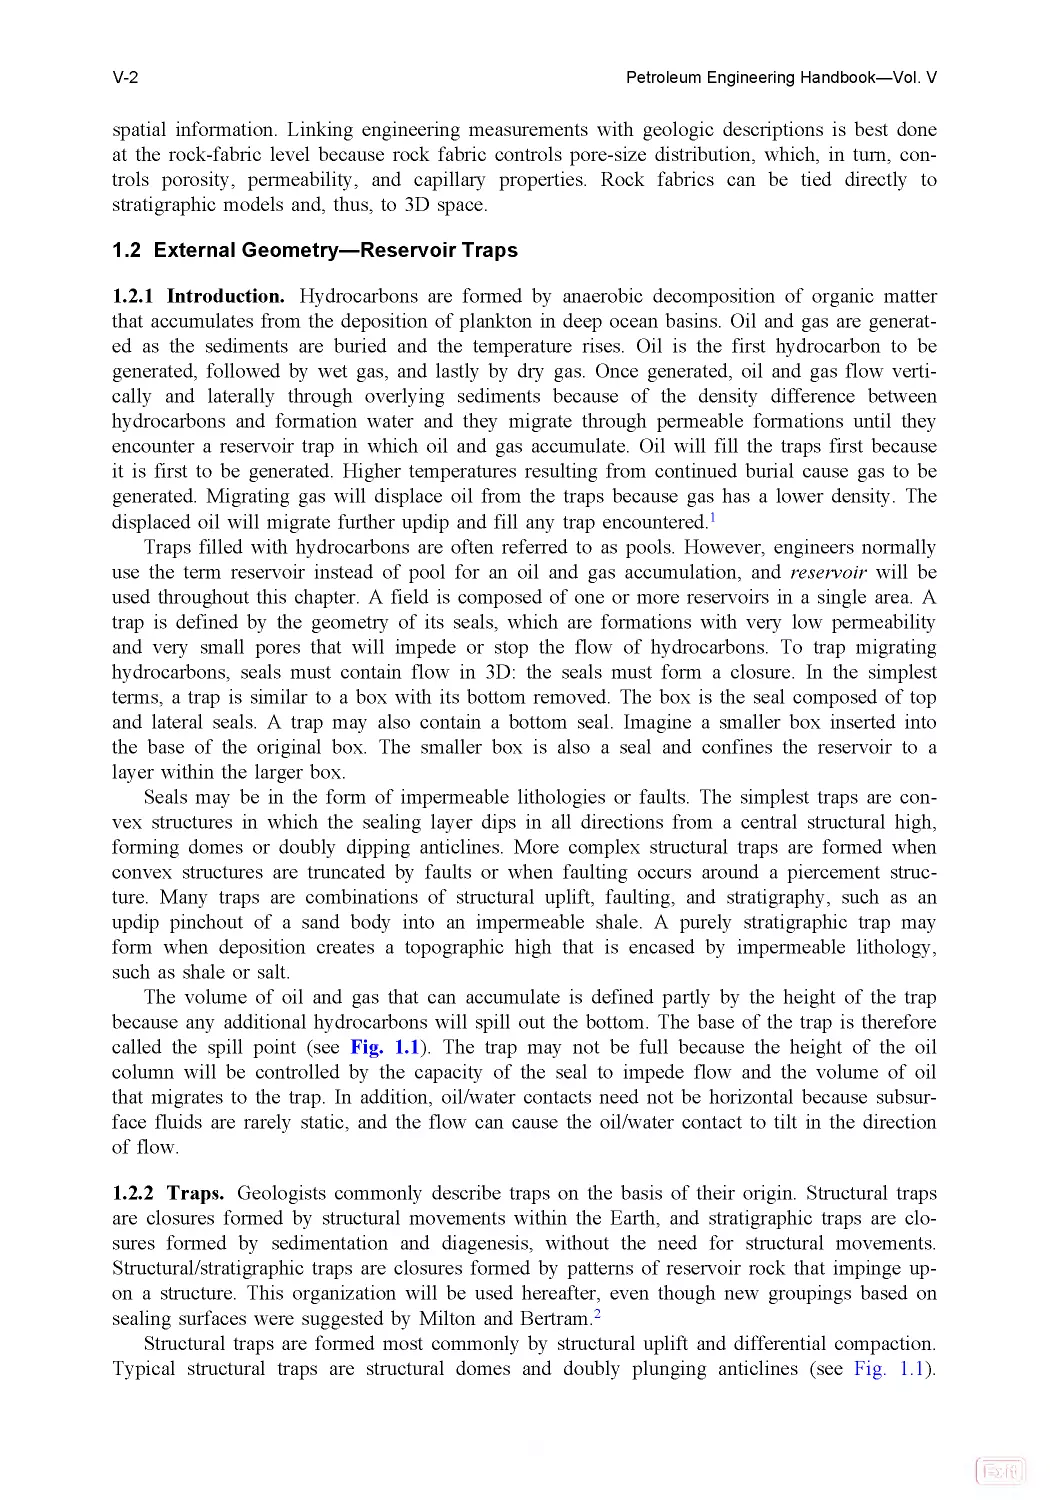 1.2 External Geometry—Reservoir Traps